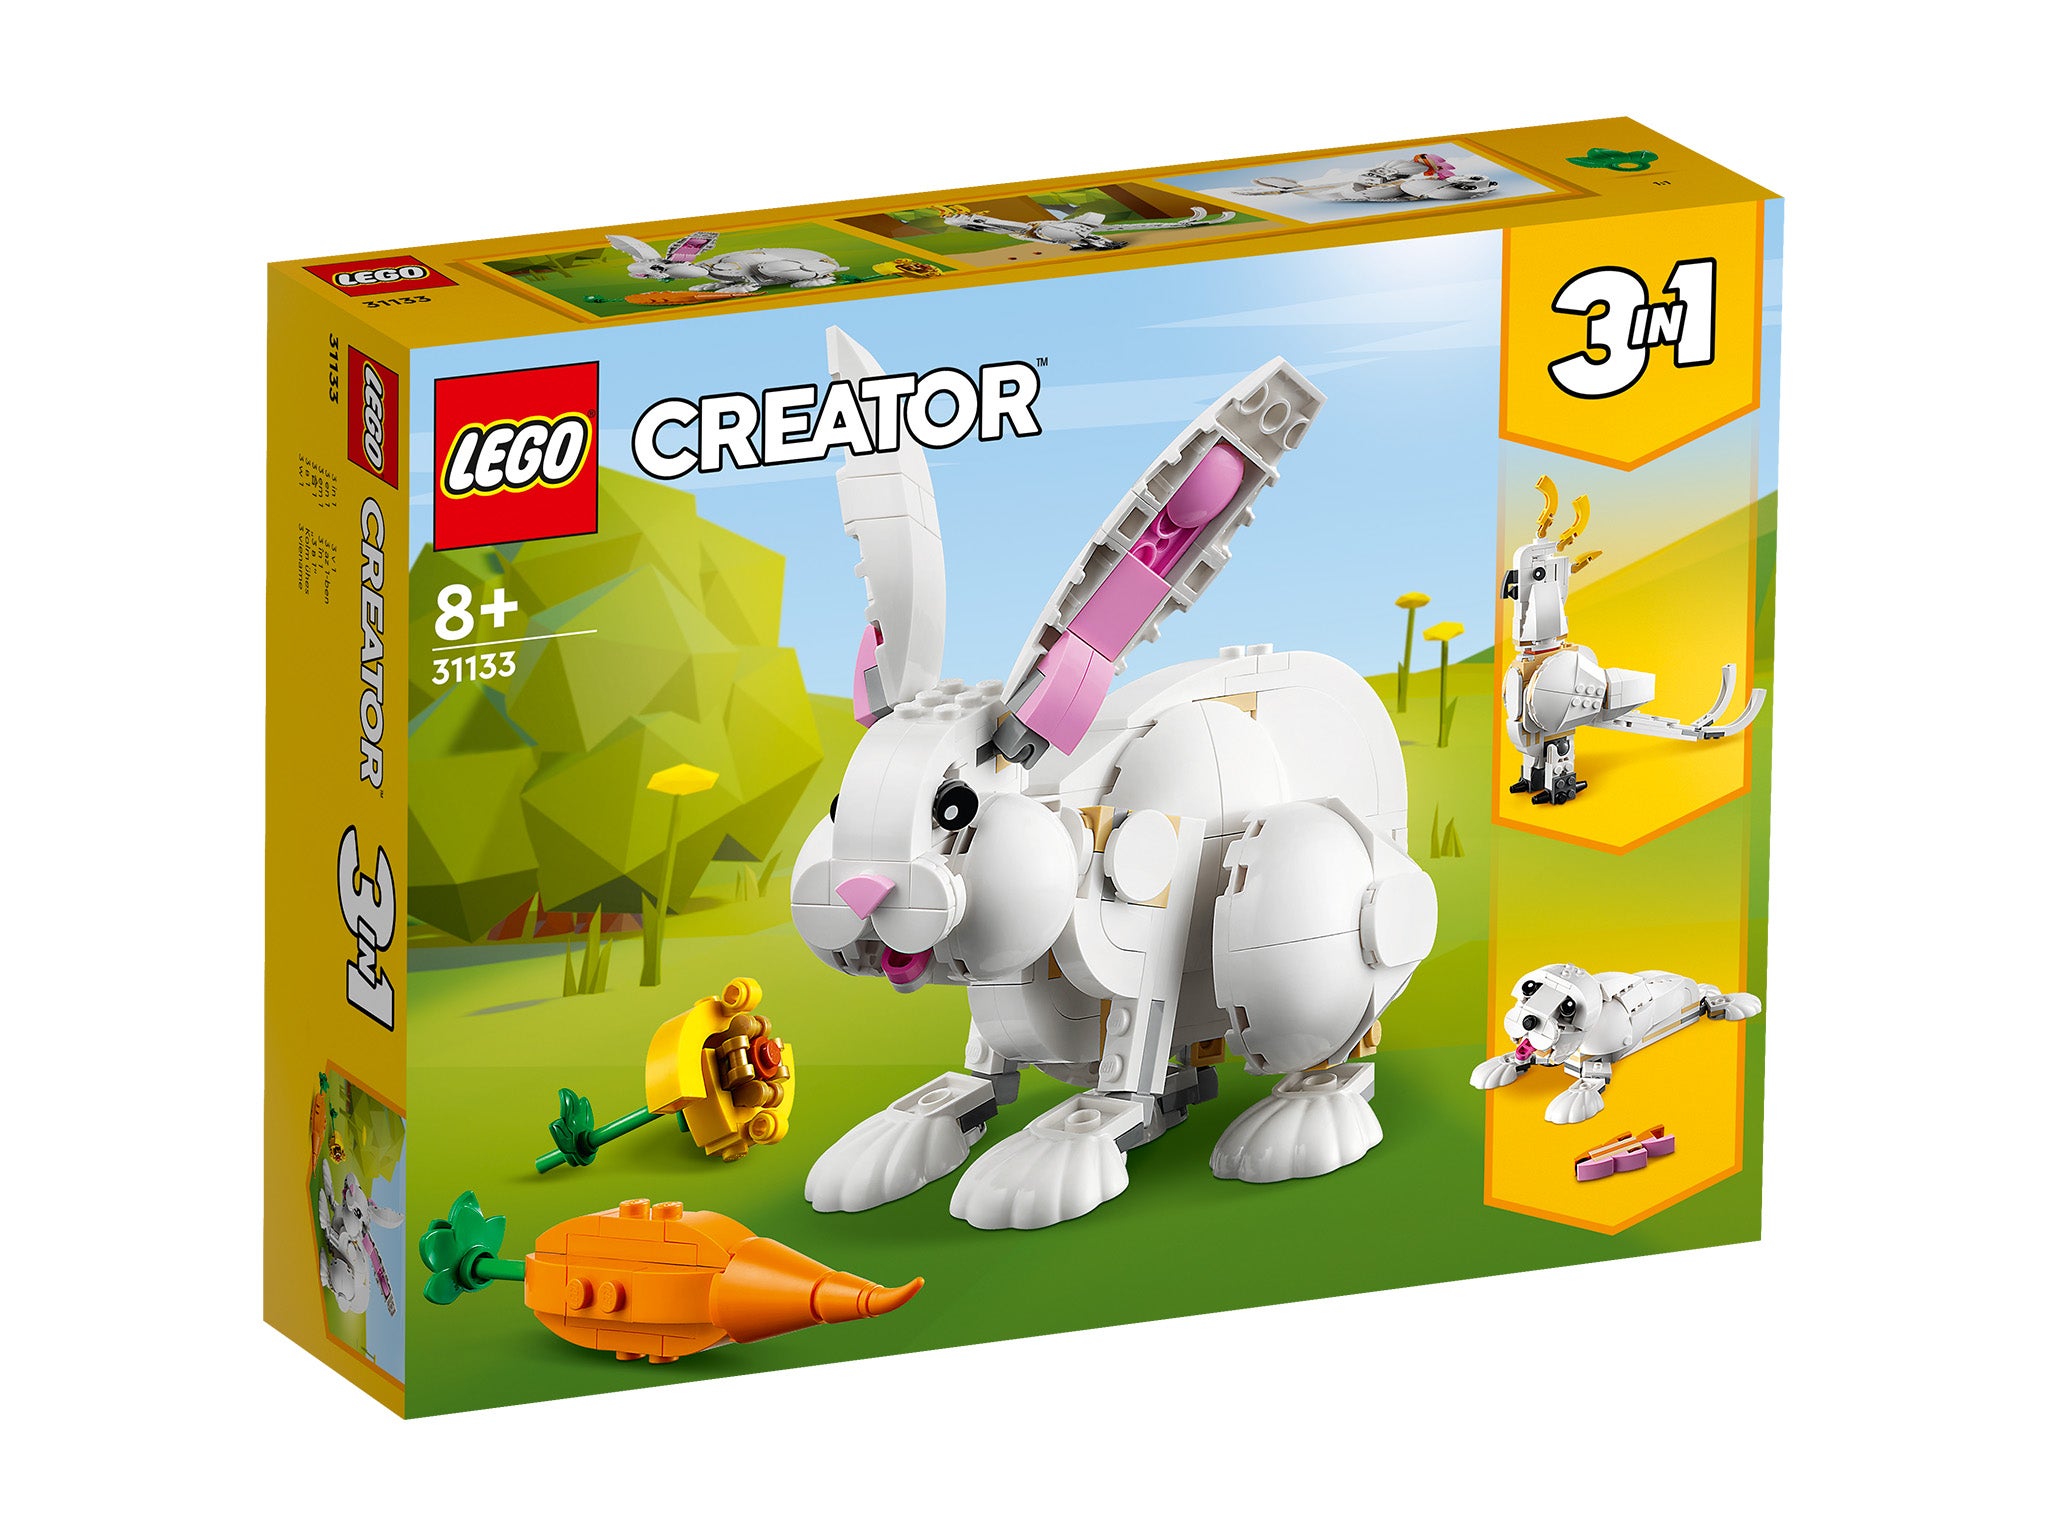 Lego creator 3-in-1 31133 white rabbit set